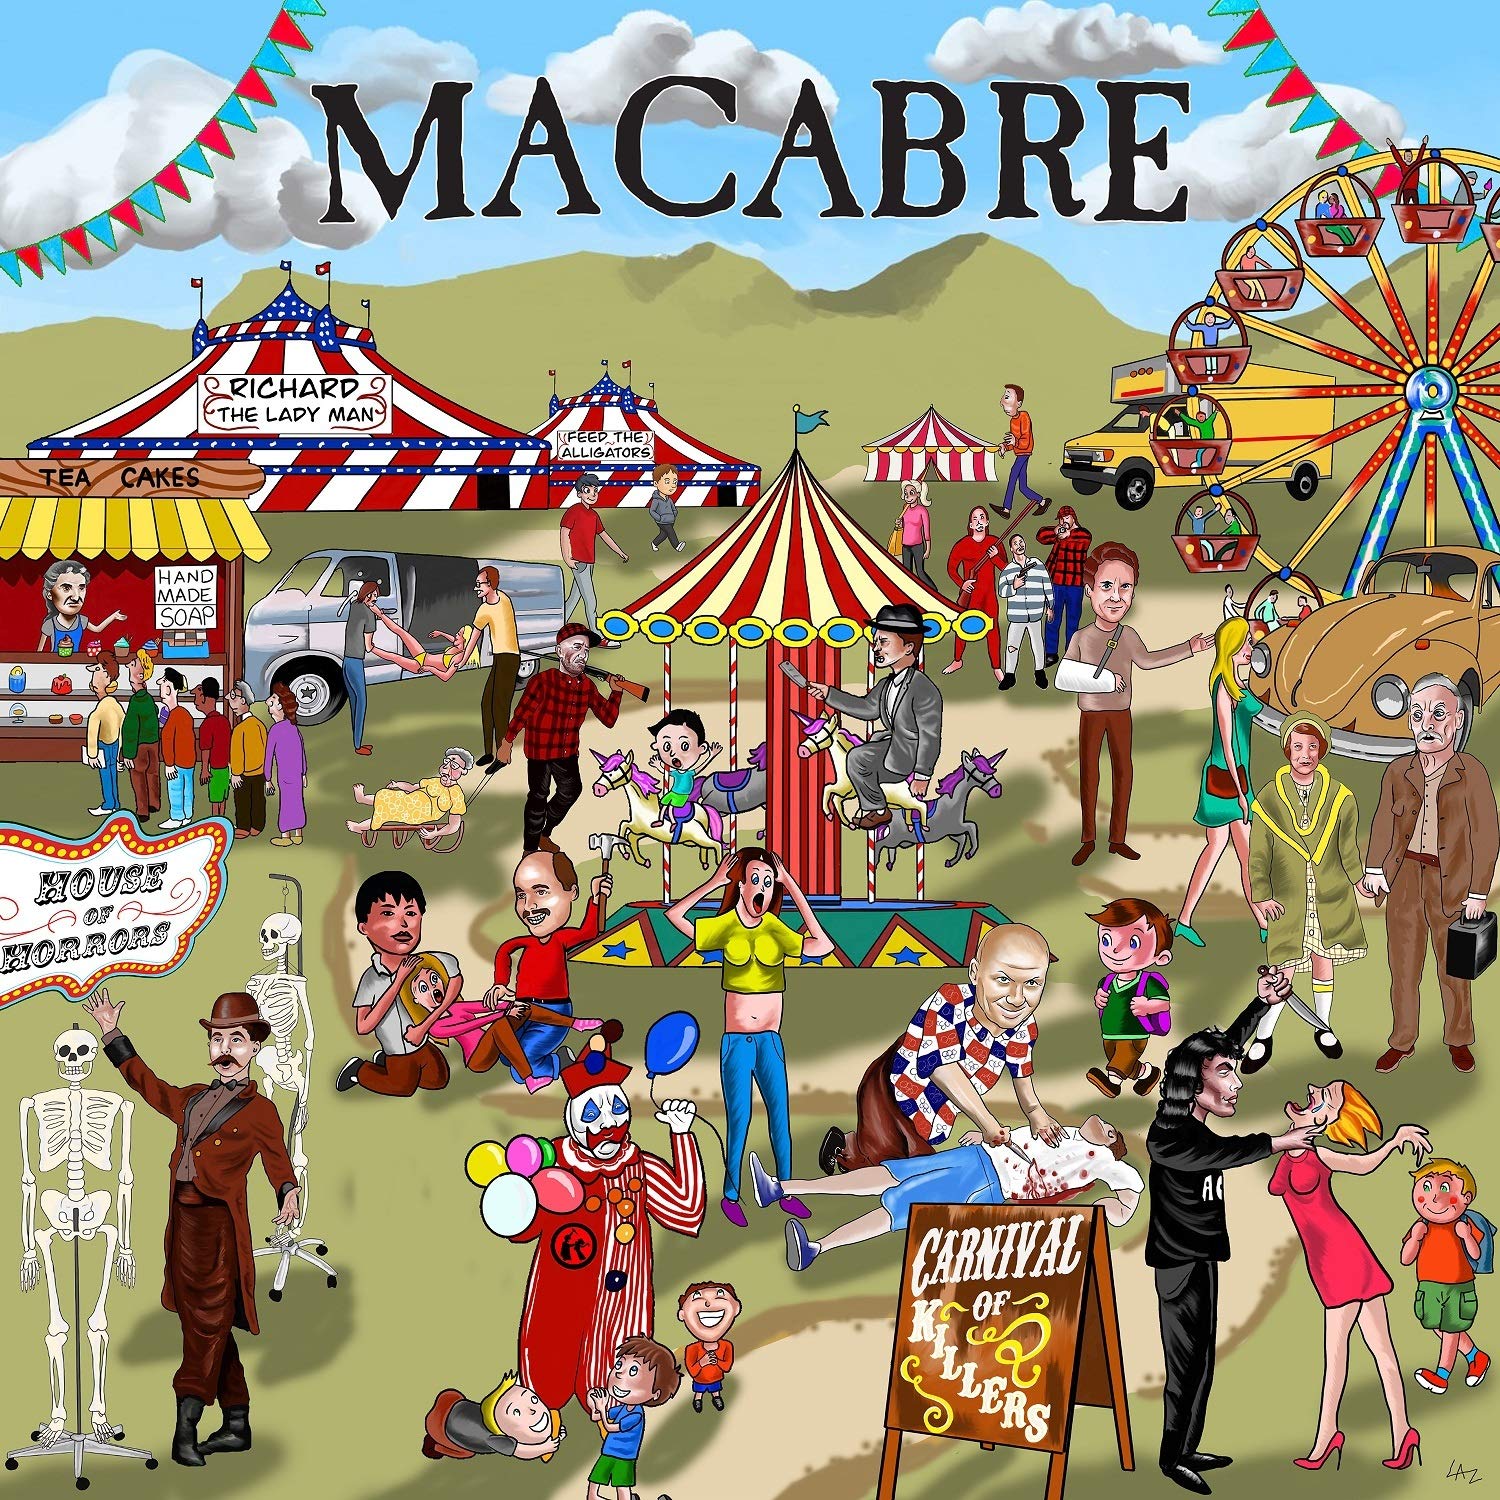 Macabre - Carnival of Killers